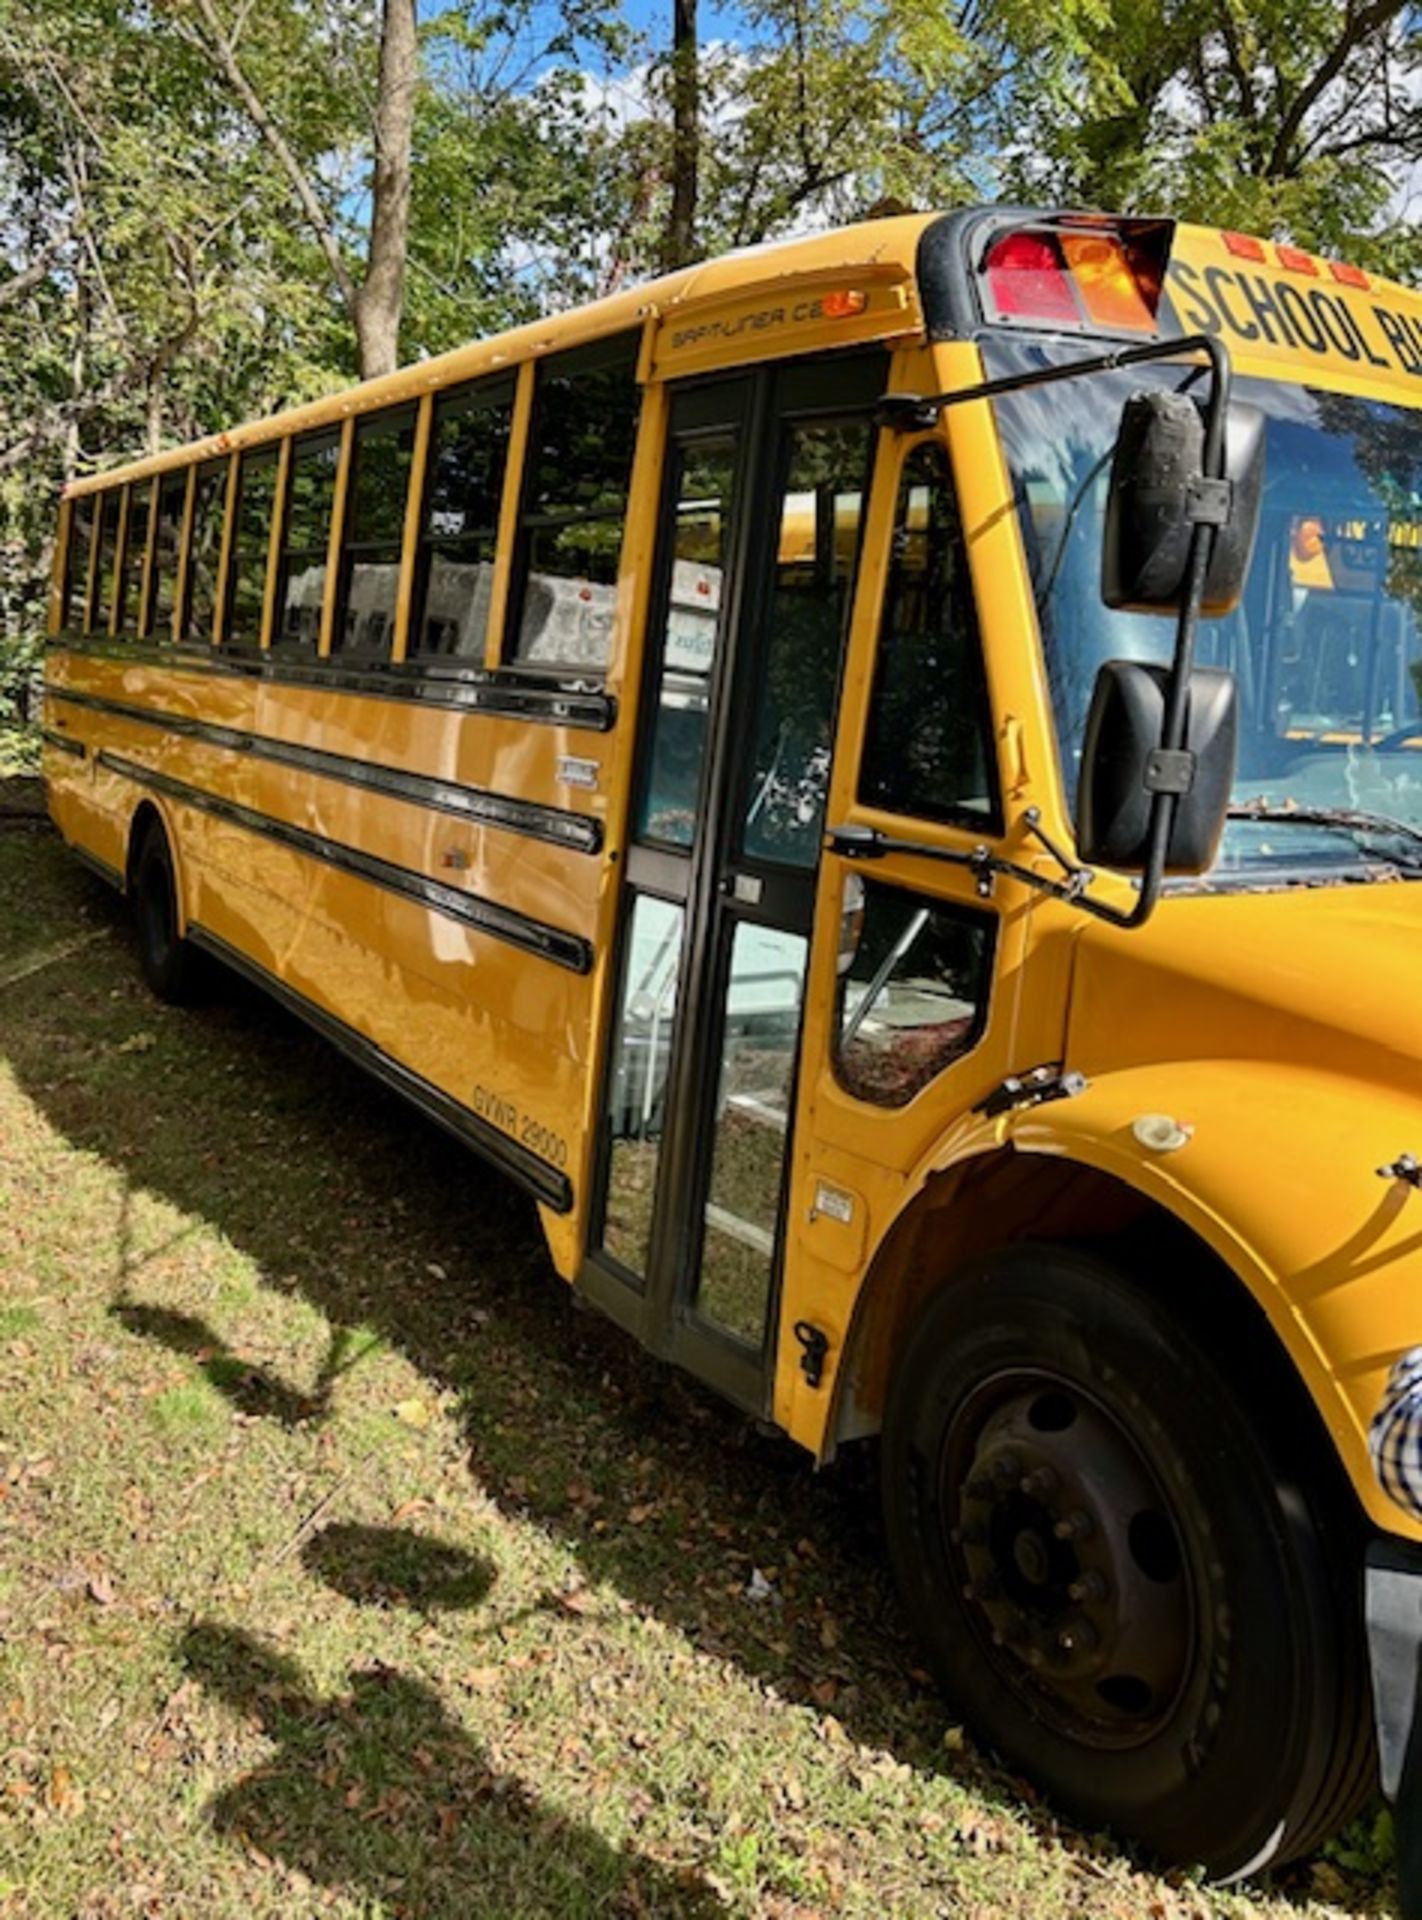 2018 Thomas 54 Seat School Bus - Image 2 of 14